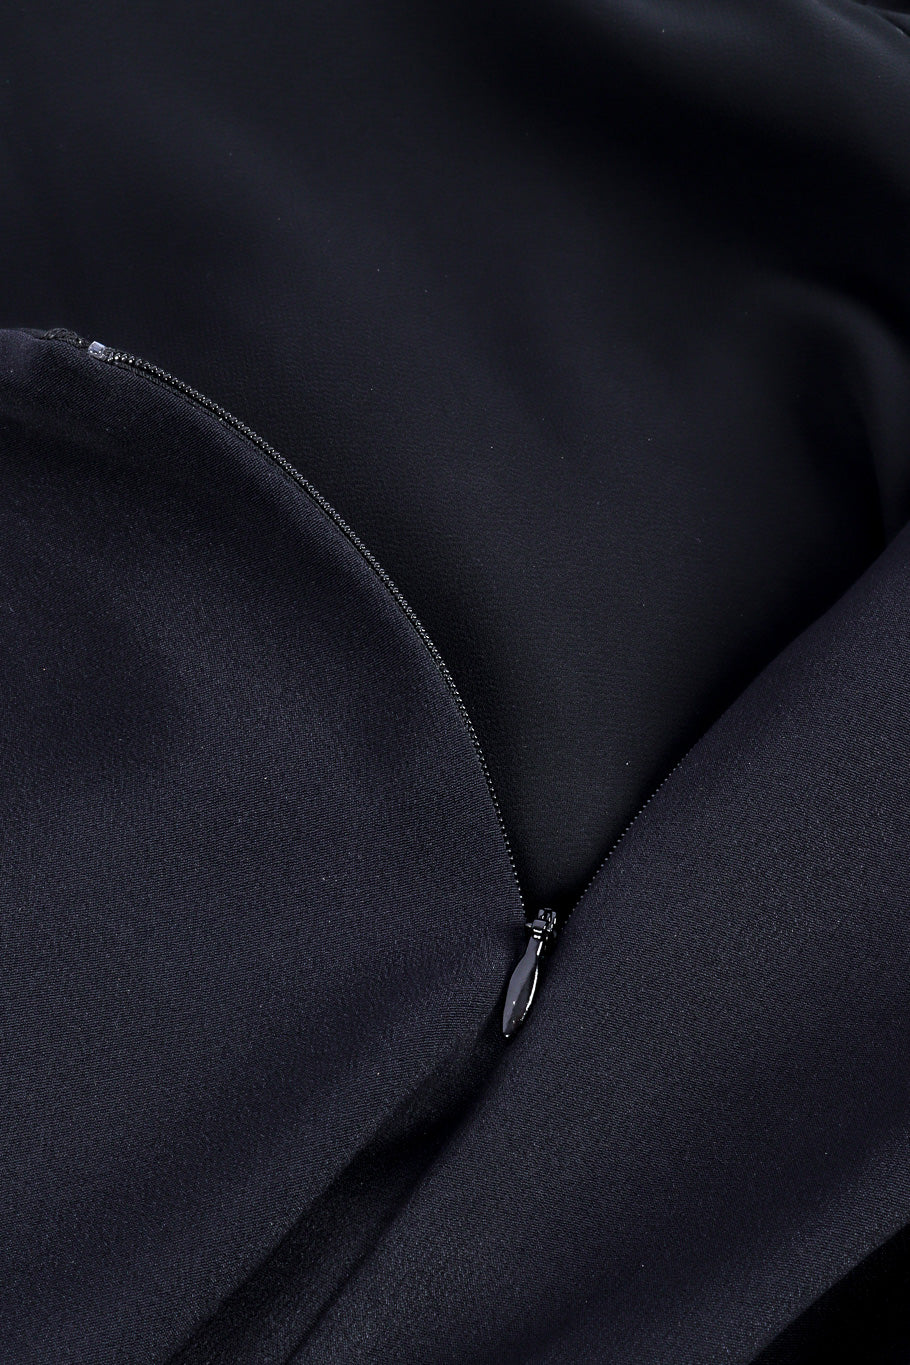 Valentino open back halter gown back zipper @recessla